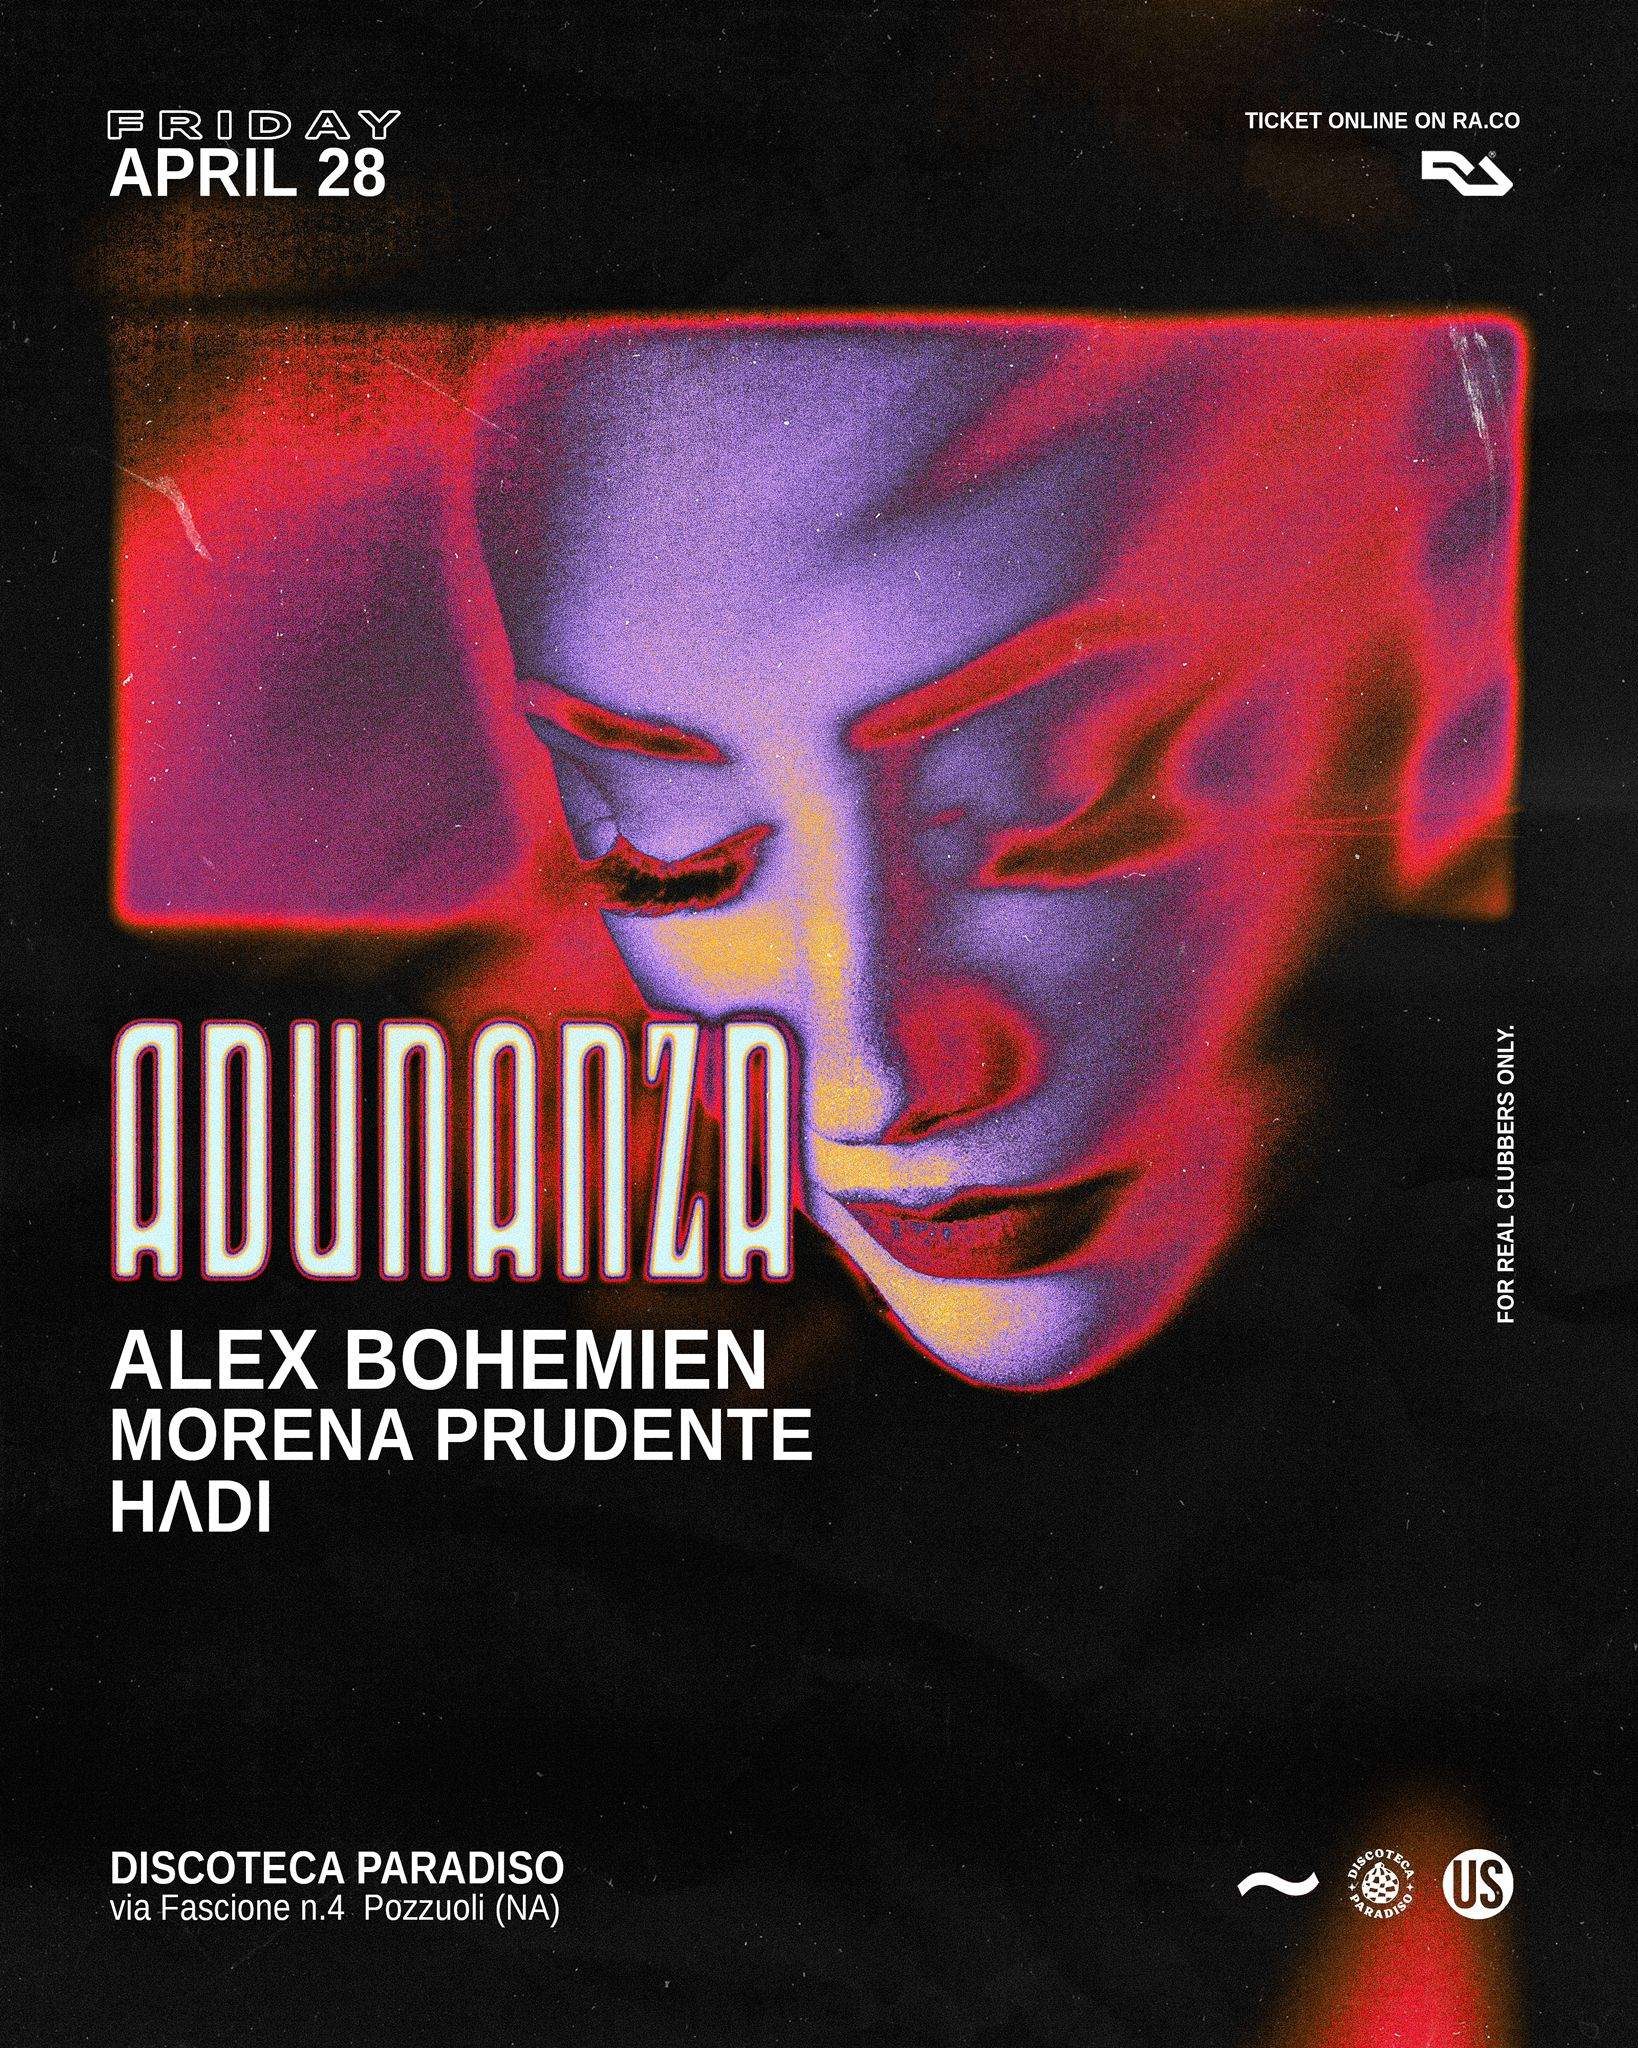 ADUNANZA ~ 22 • Alex Bohemien • Morena Prudente • HΛDI - フライヤー表